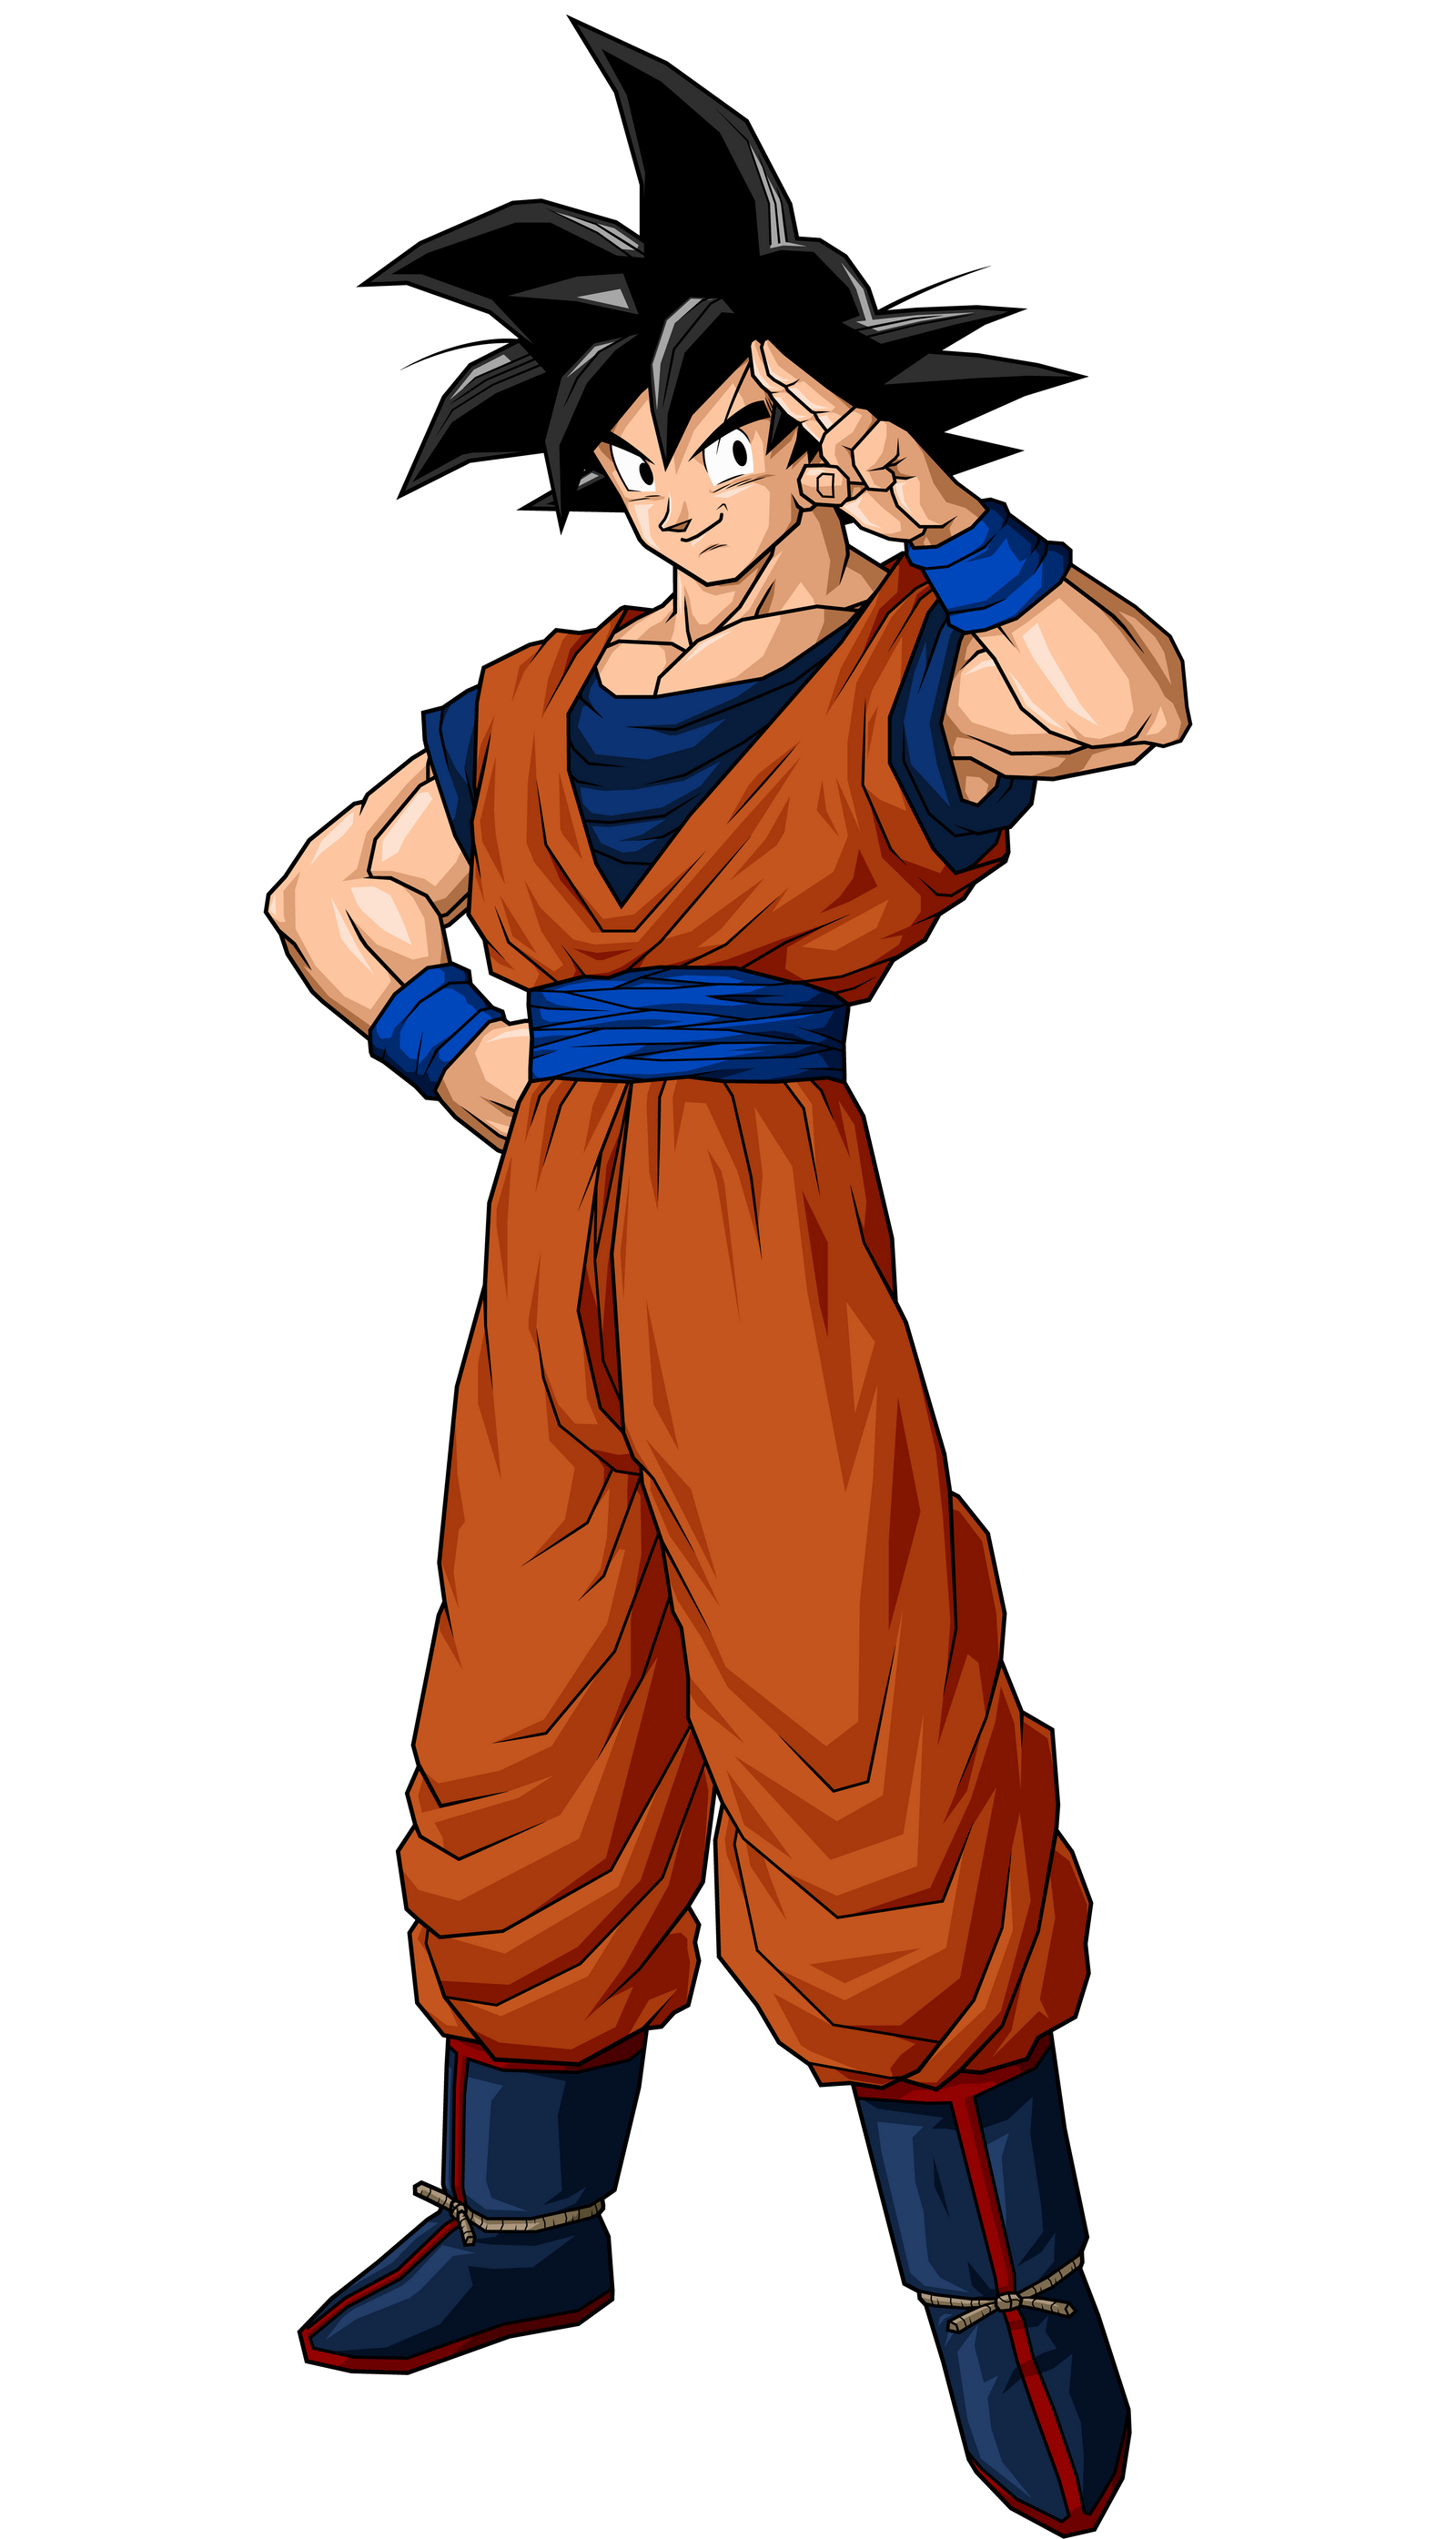 Goku (End) DBZ BT3 Style by DrozBT3 on DeviantArt